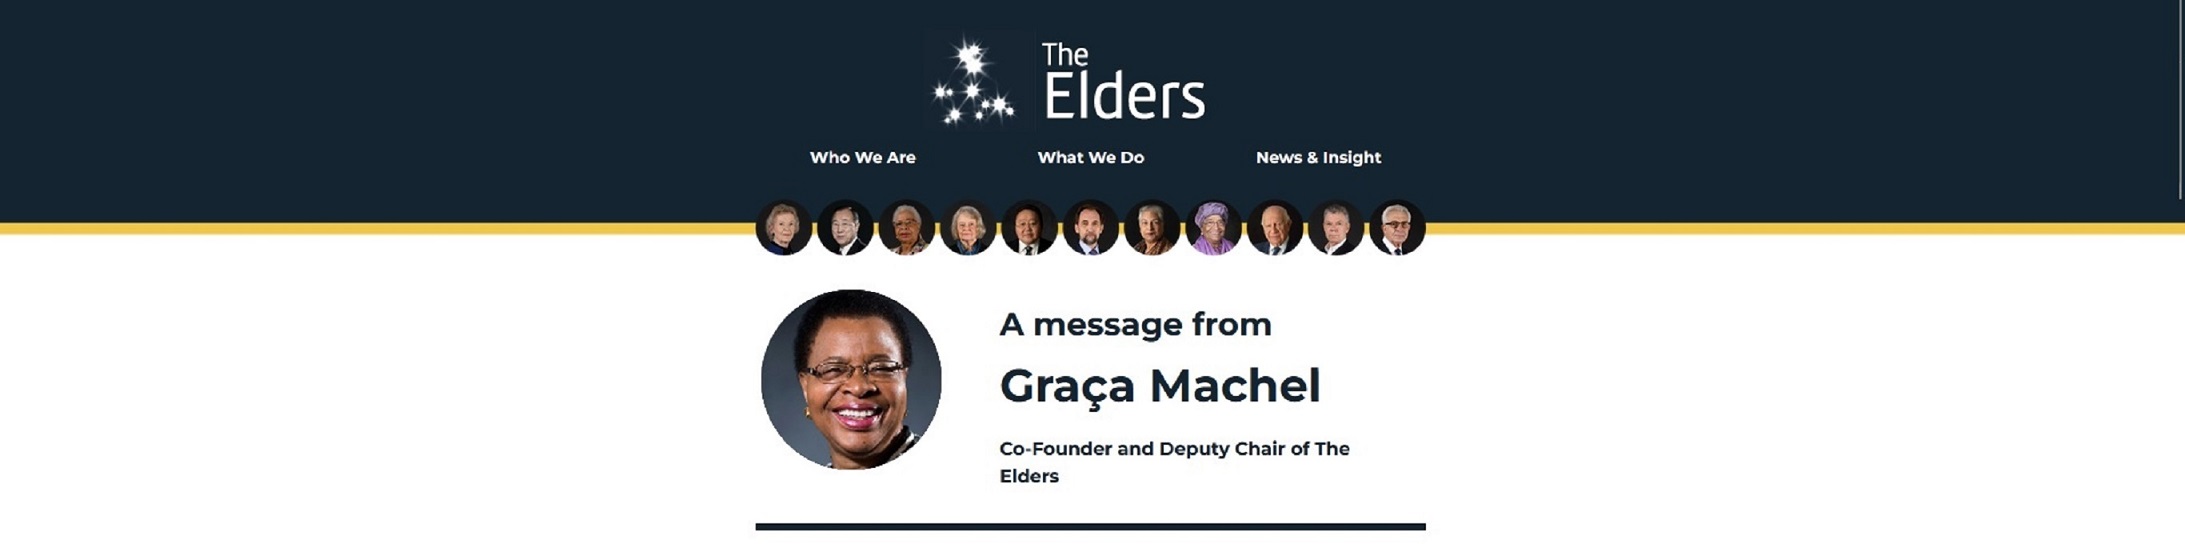 A message from The Elders – Graça Machel